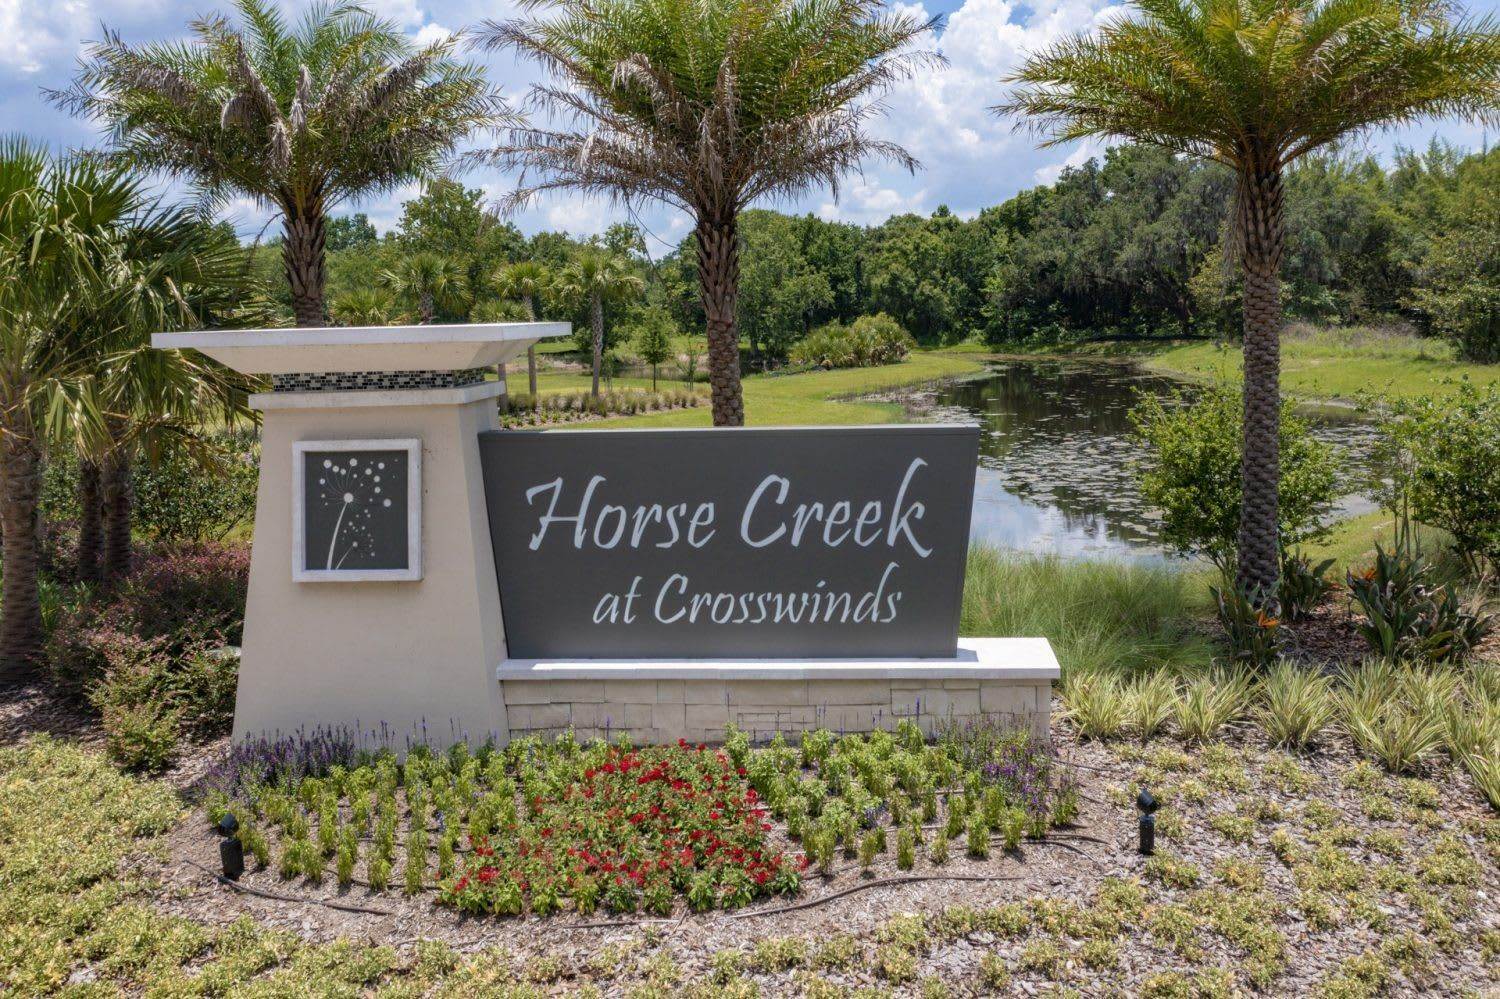 12. Horse Creek at Crosswinds building at 402 Cool Summer Lane, Davenport, FL 33837